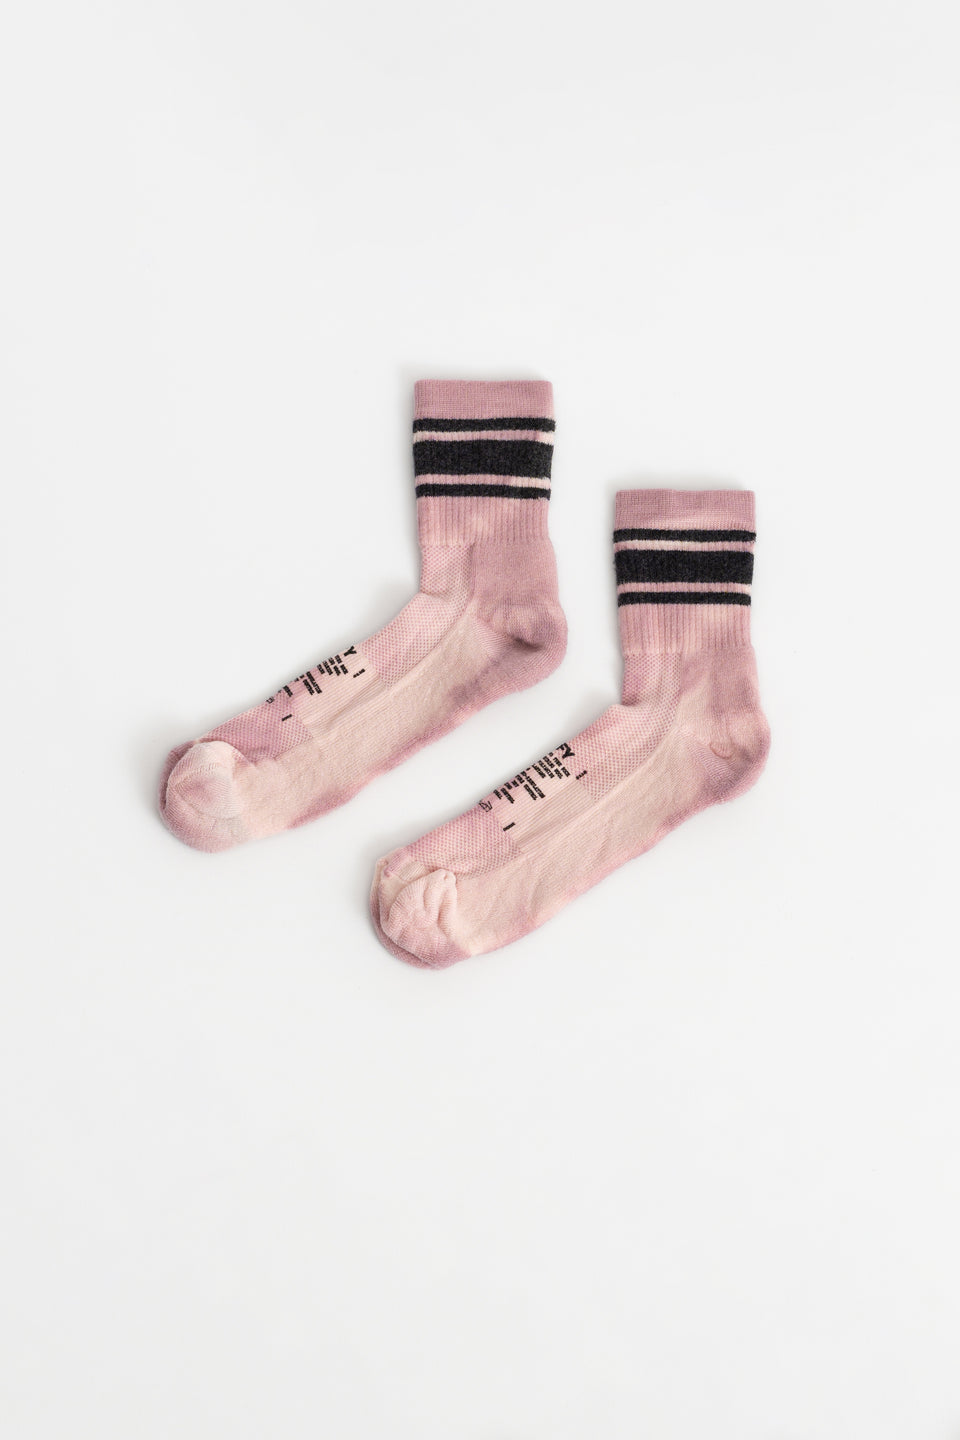 SATISFY men's running apparel France Merino Tube Socks Rock Salt Tie-Dye Calculus online shop Canada